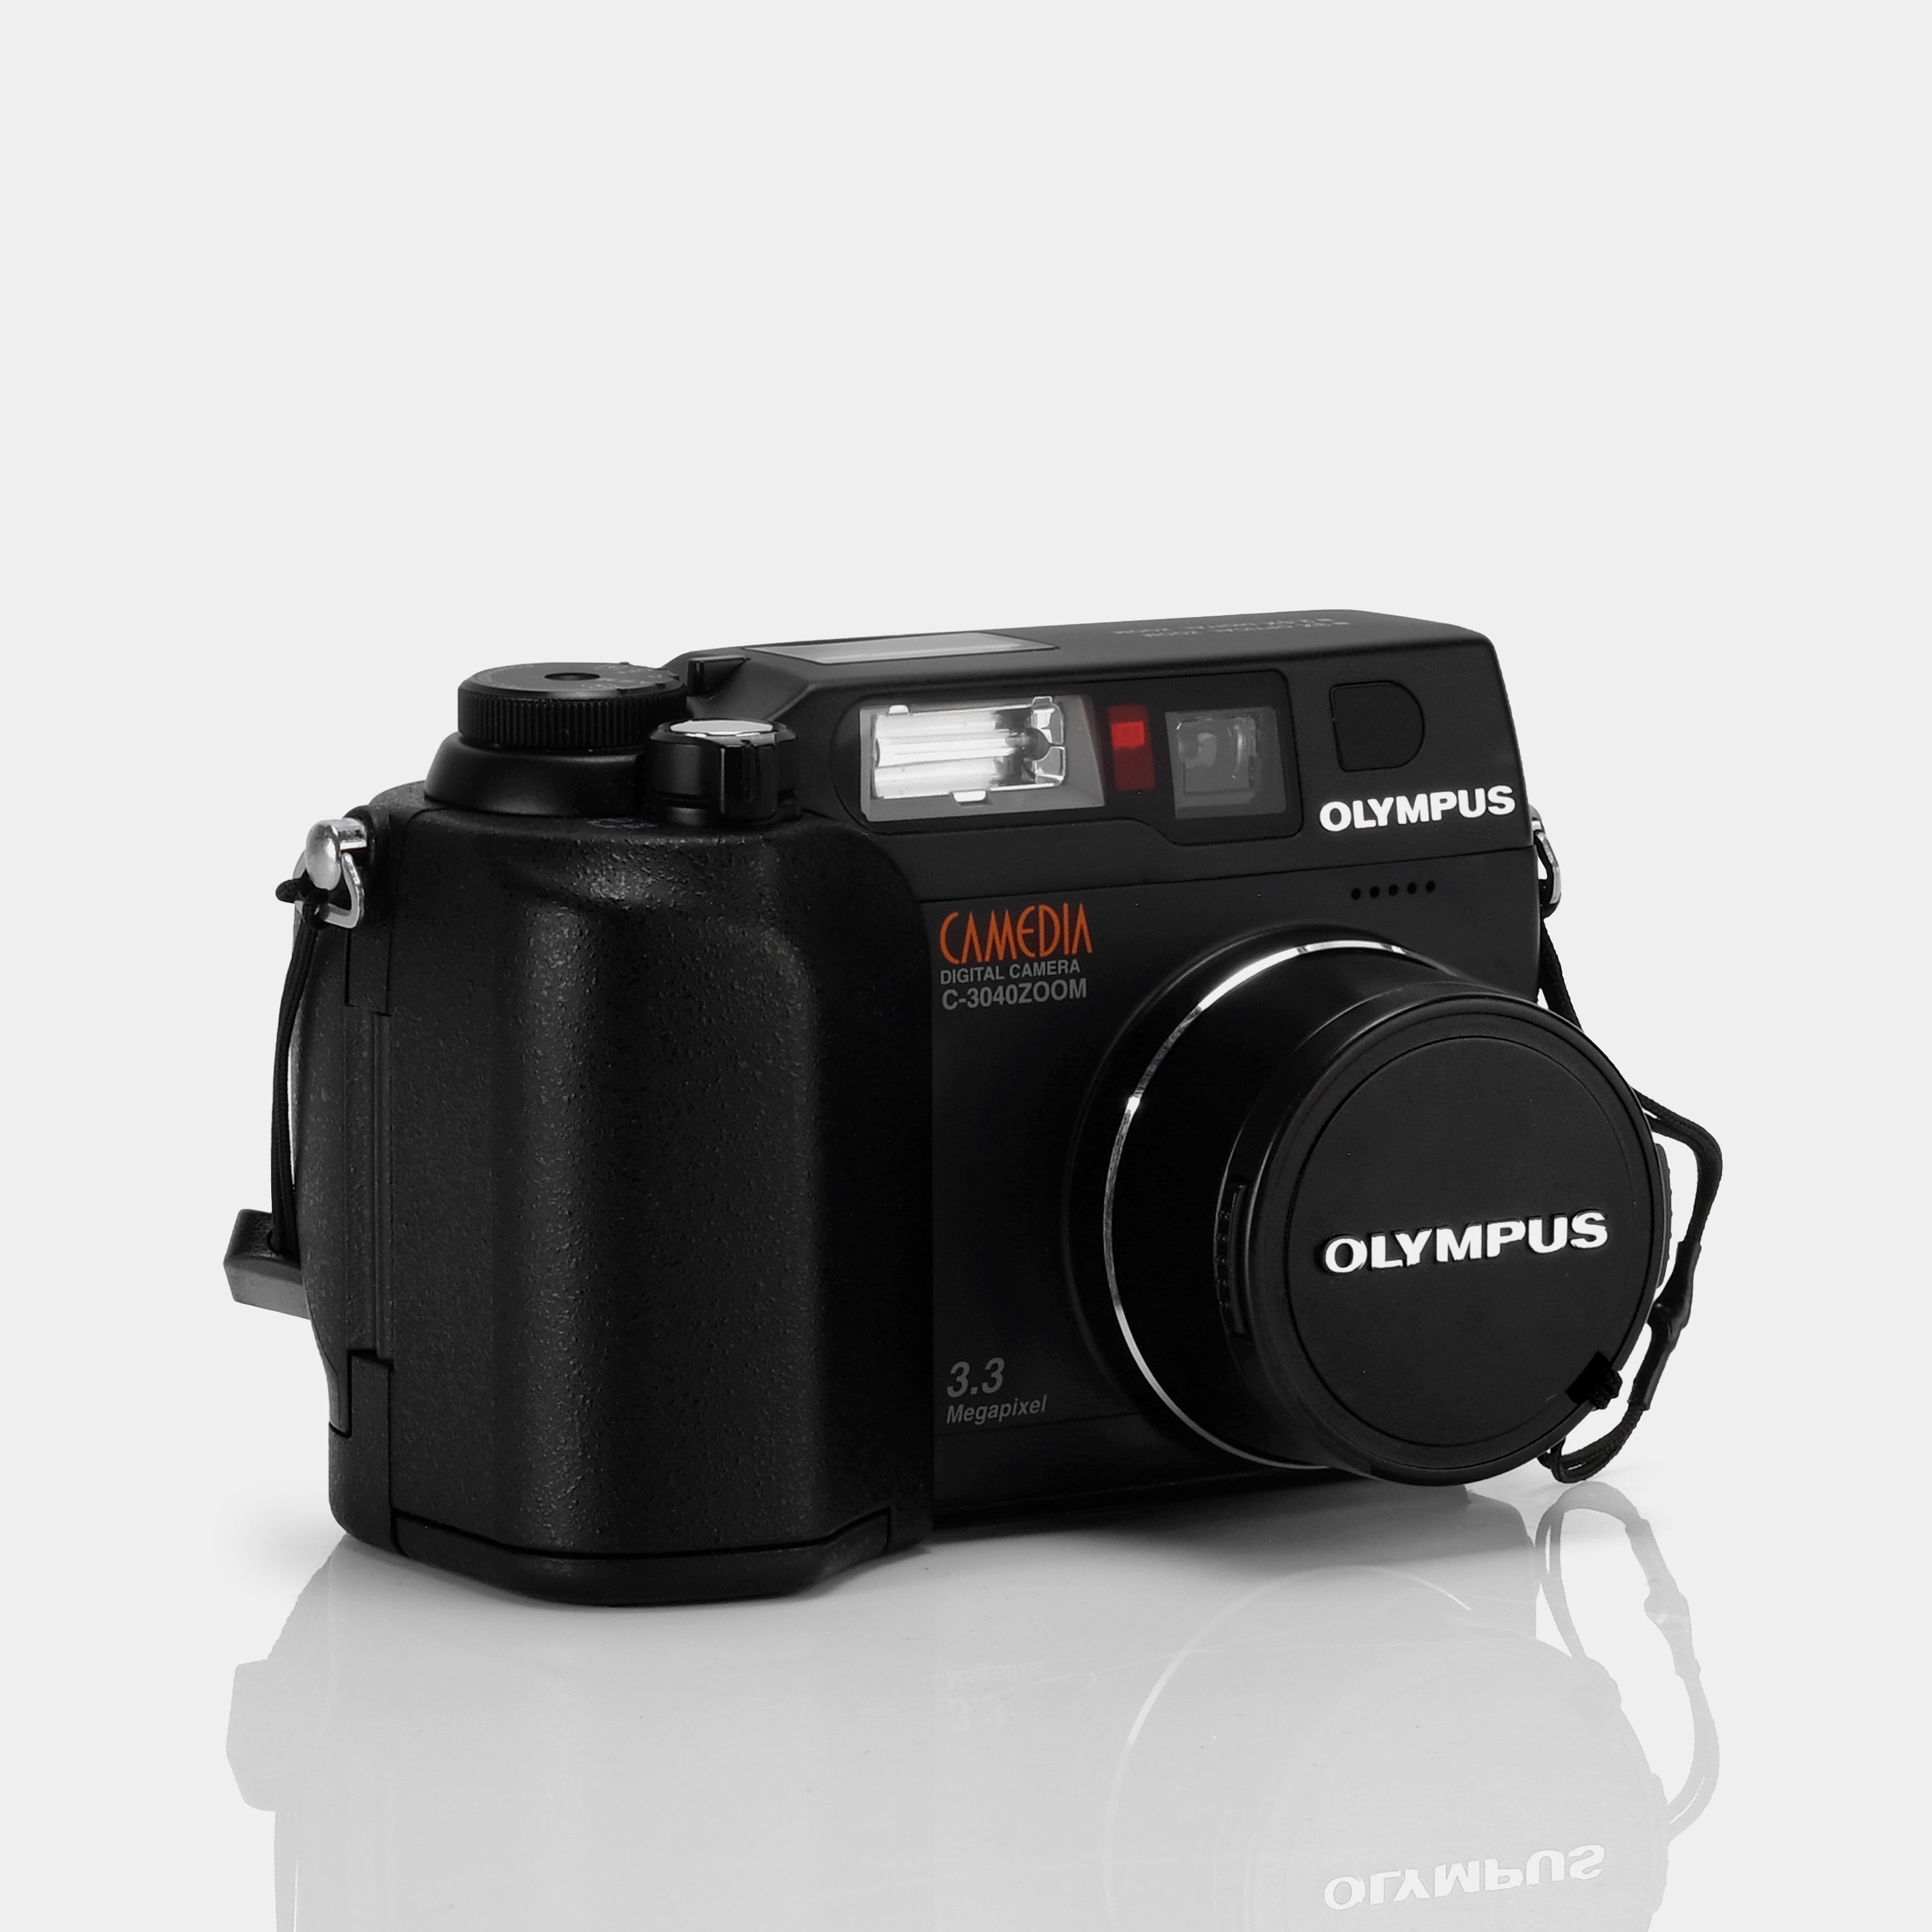 Olympus Camedia C-3040ZOOM Point and Shoot Digital Camera